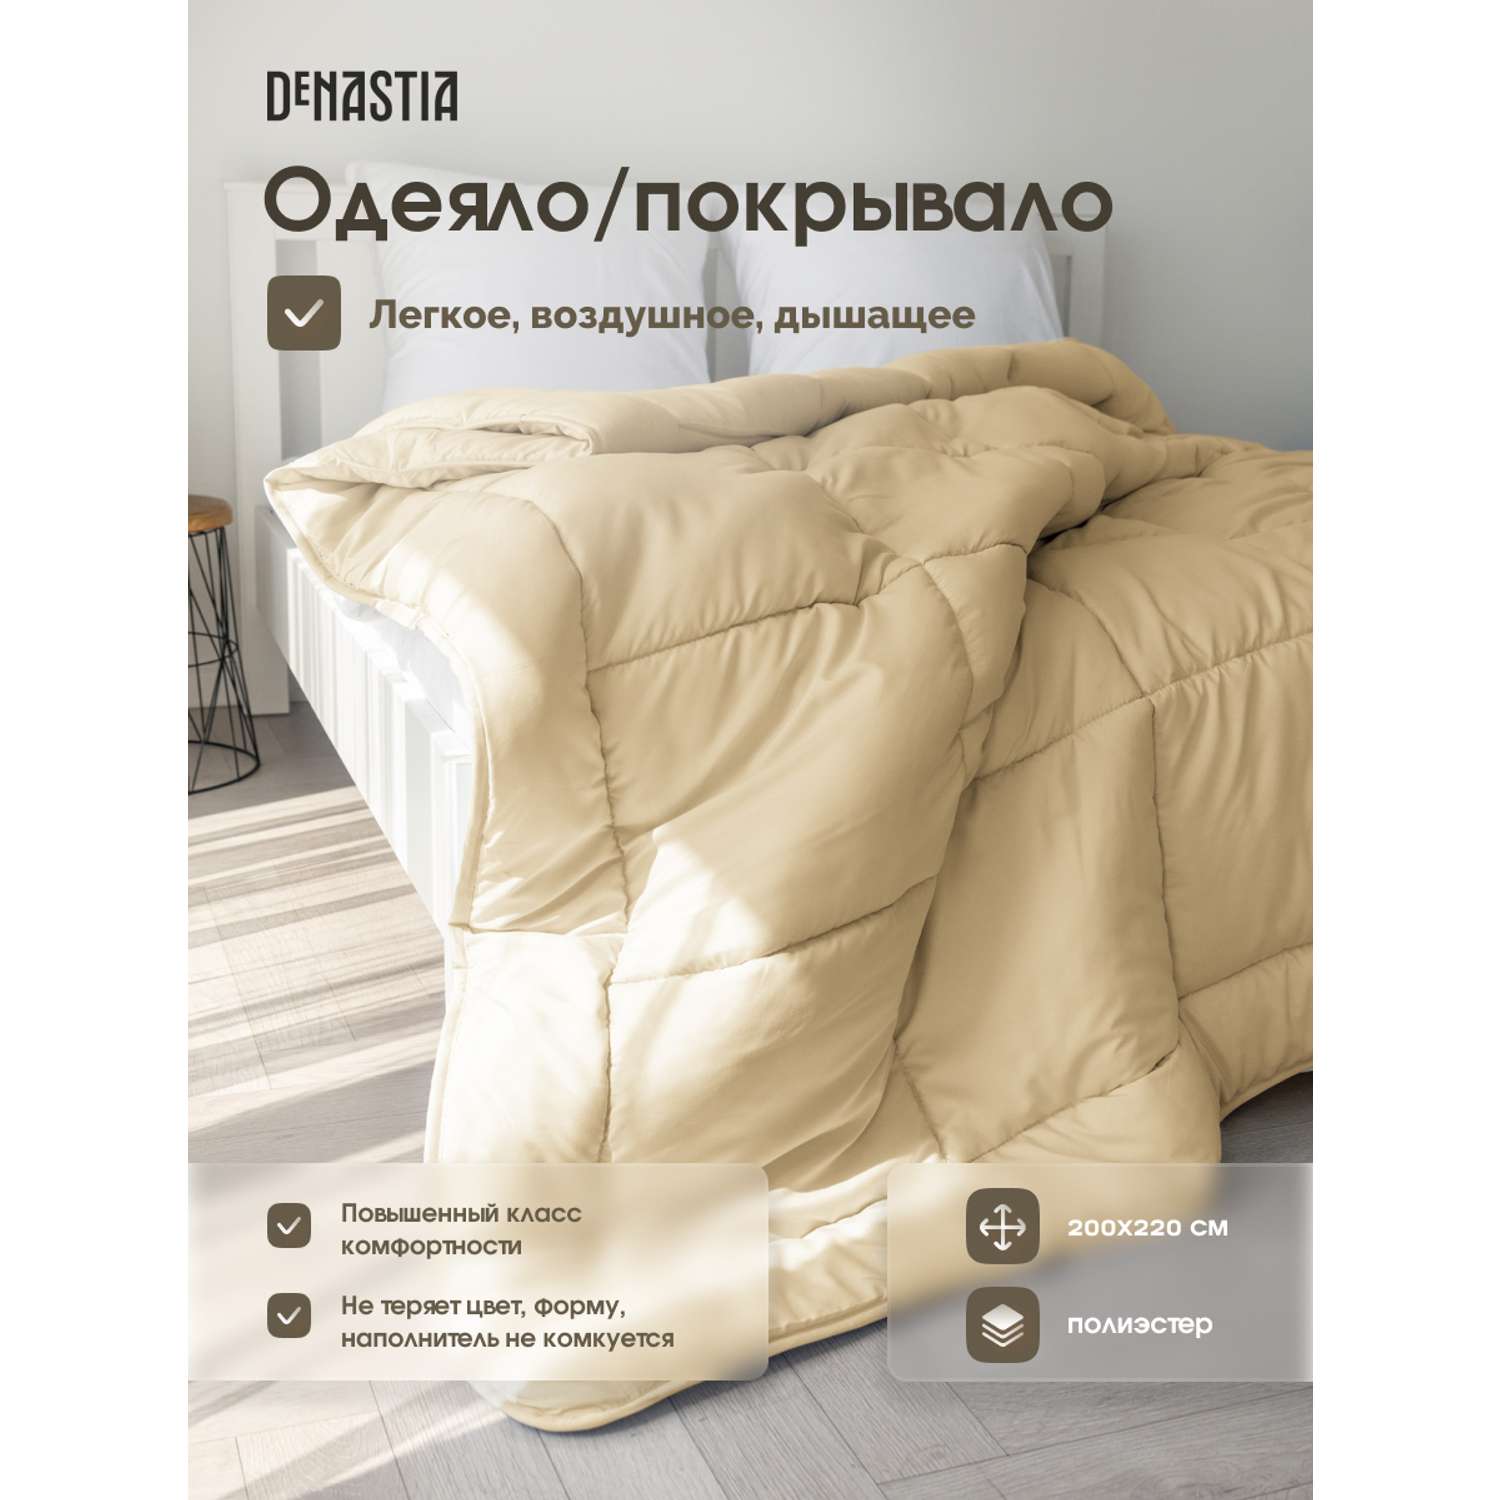 Одеяло/покрывало DeNASTIA 200x220 см желтый R020020 - фото 2